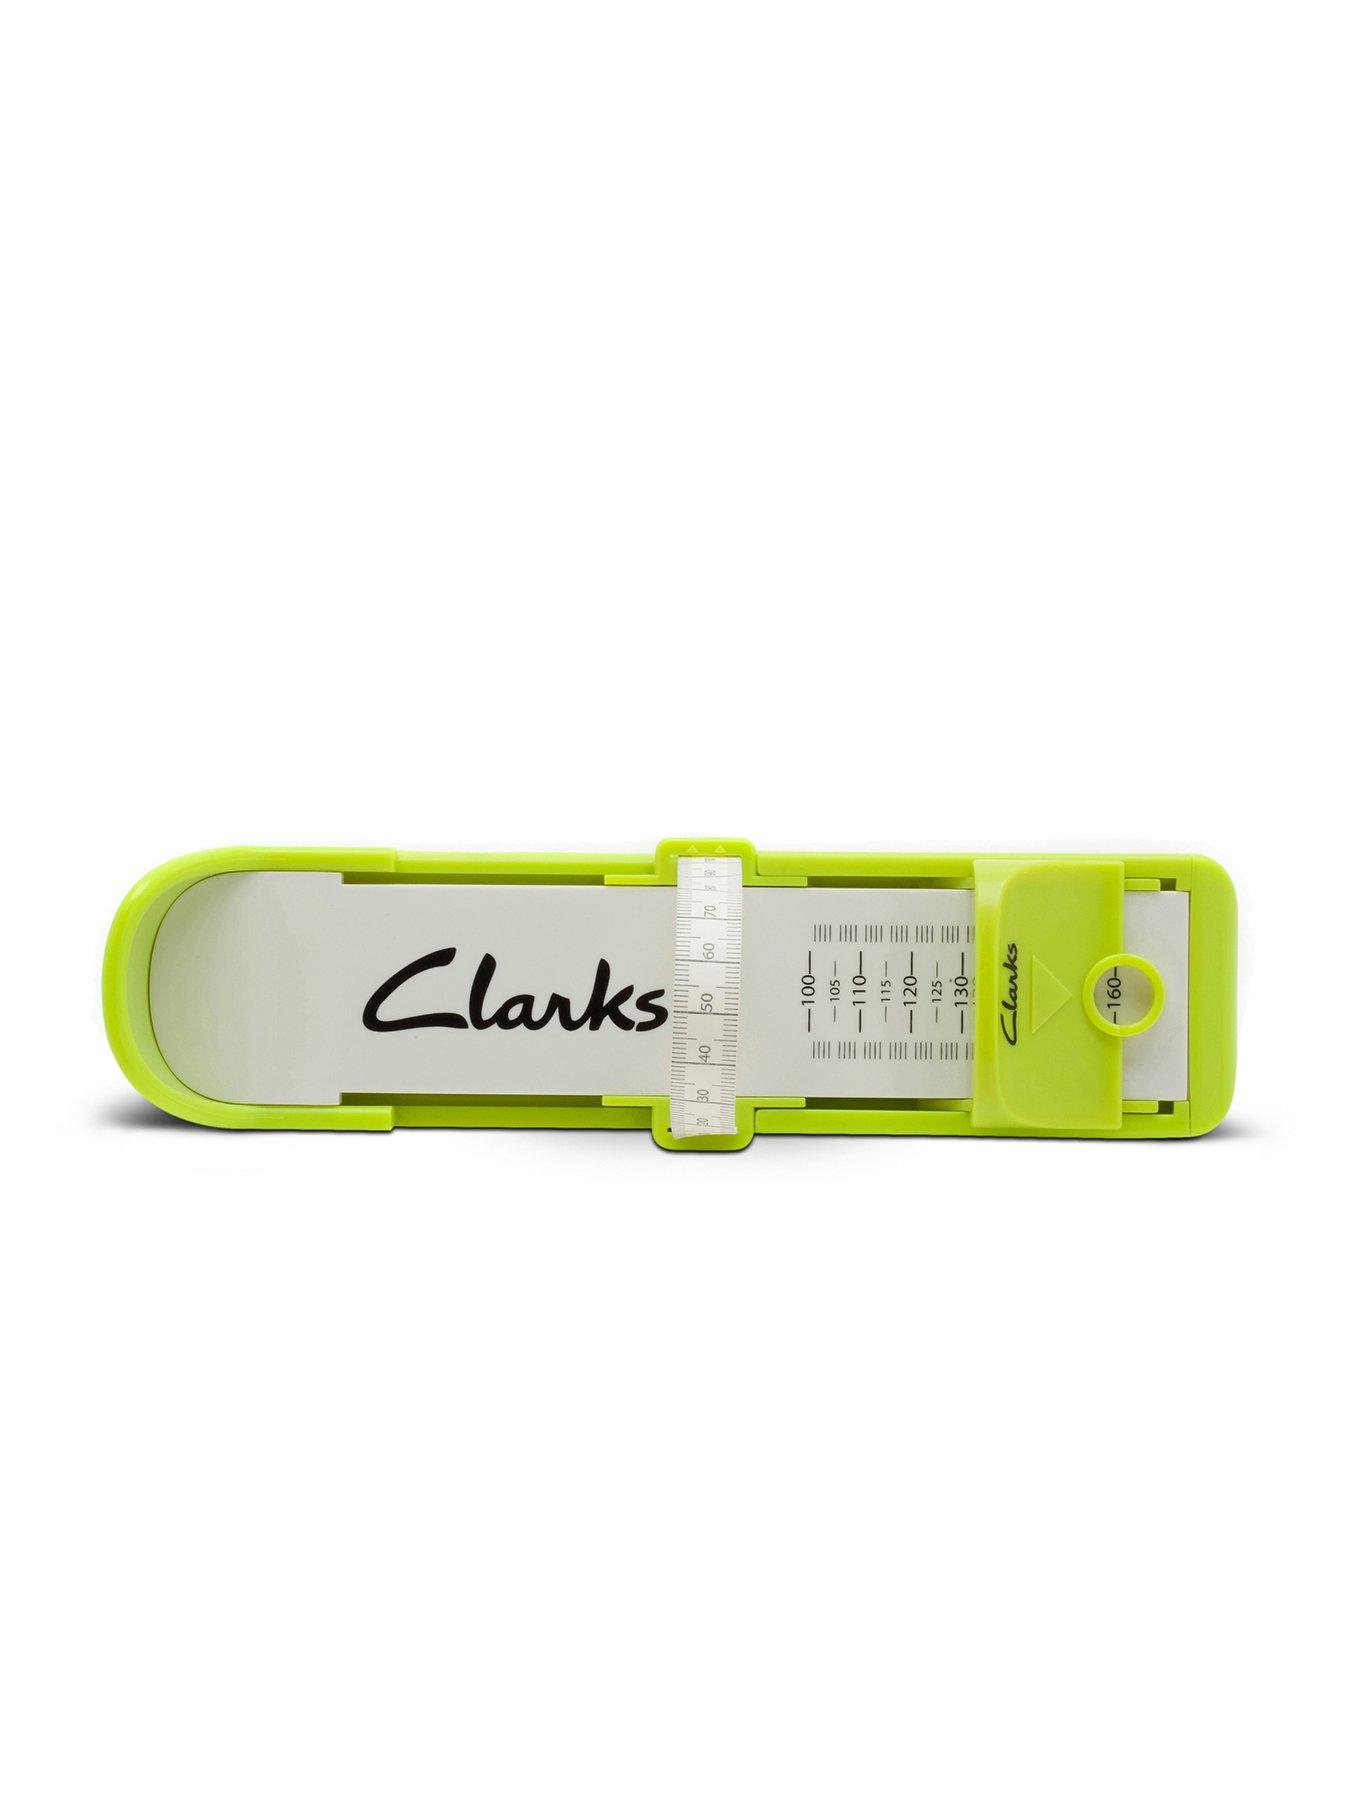 clarks size chart cm